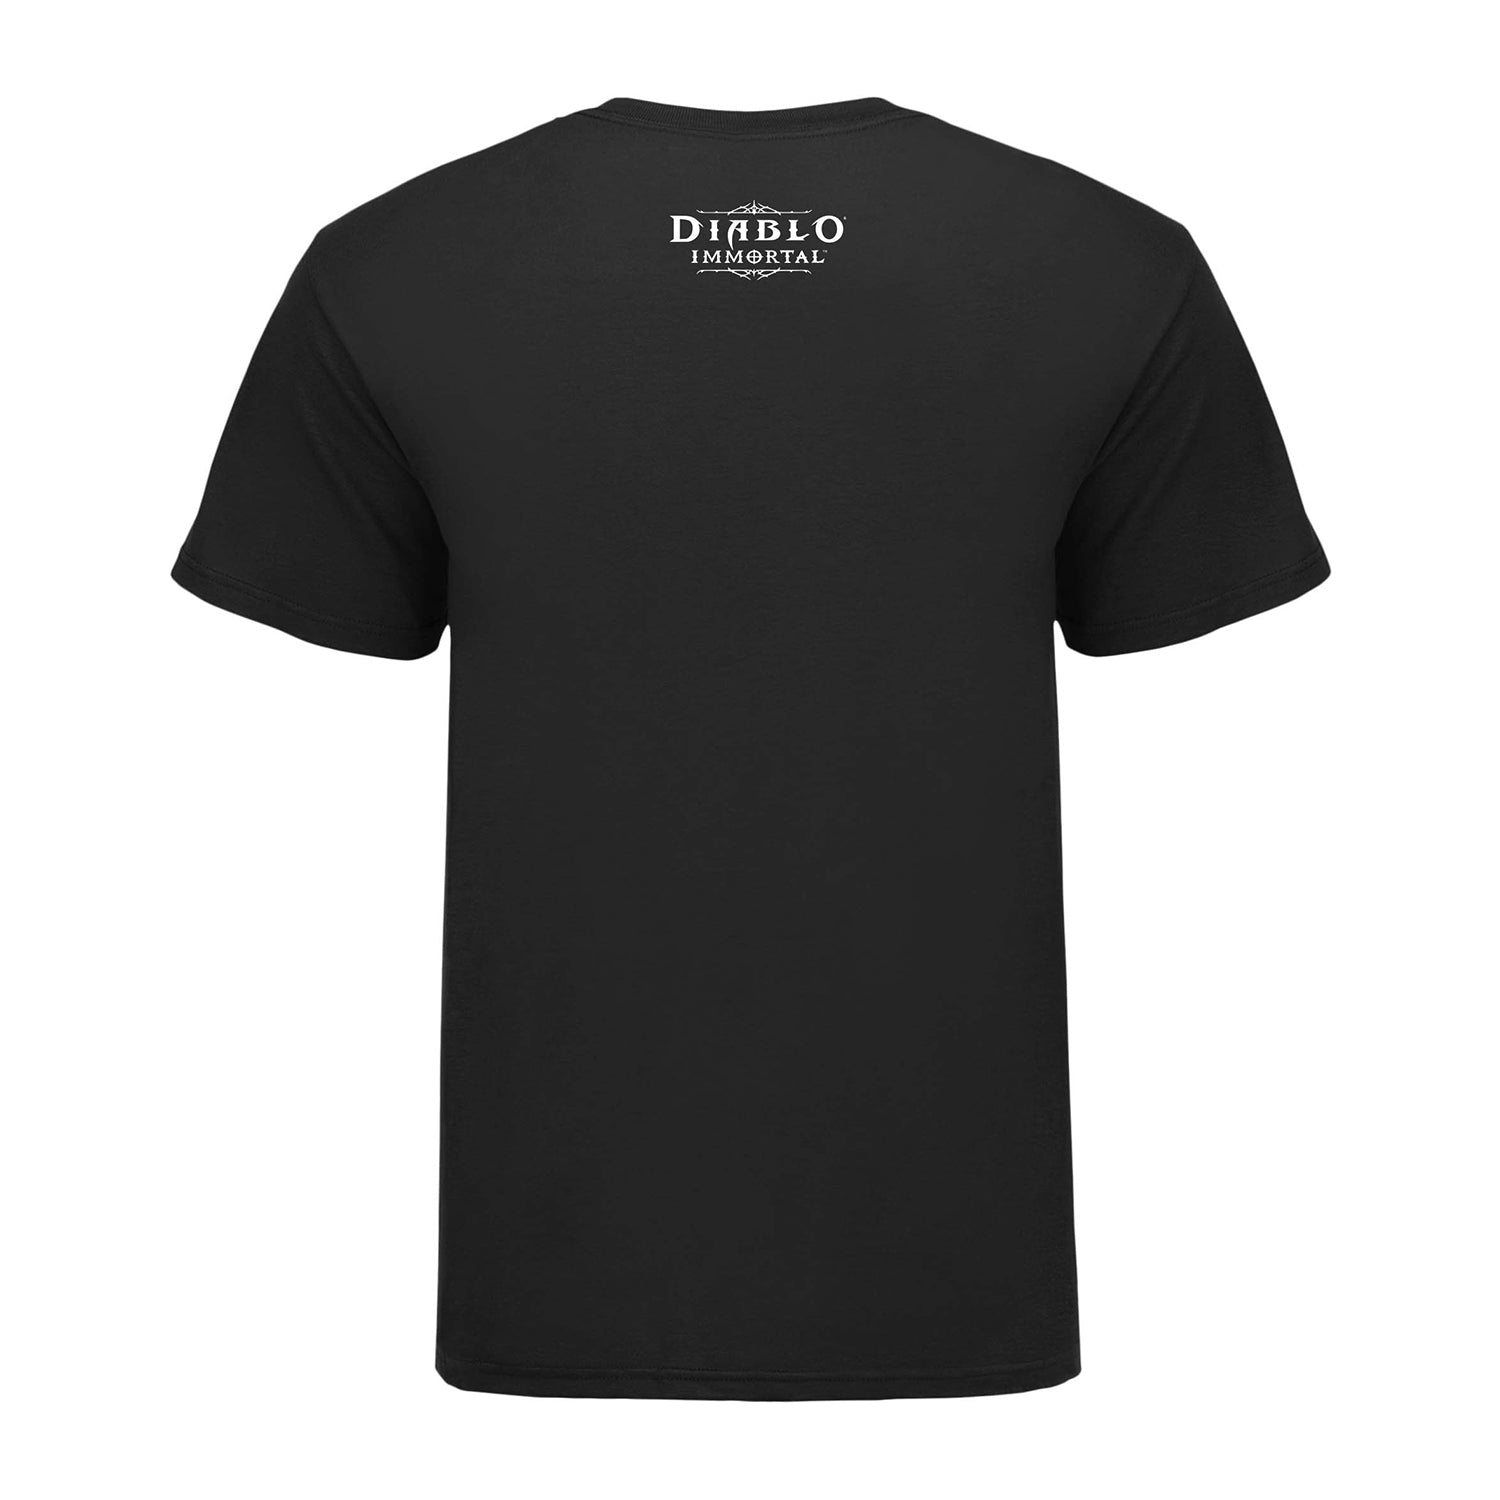 Diablo Immortal Crusader Urban Edge Black T-Shirt - Back View